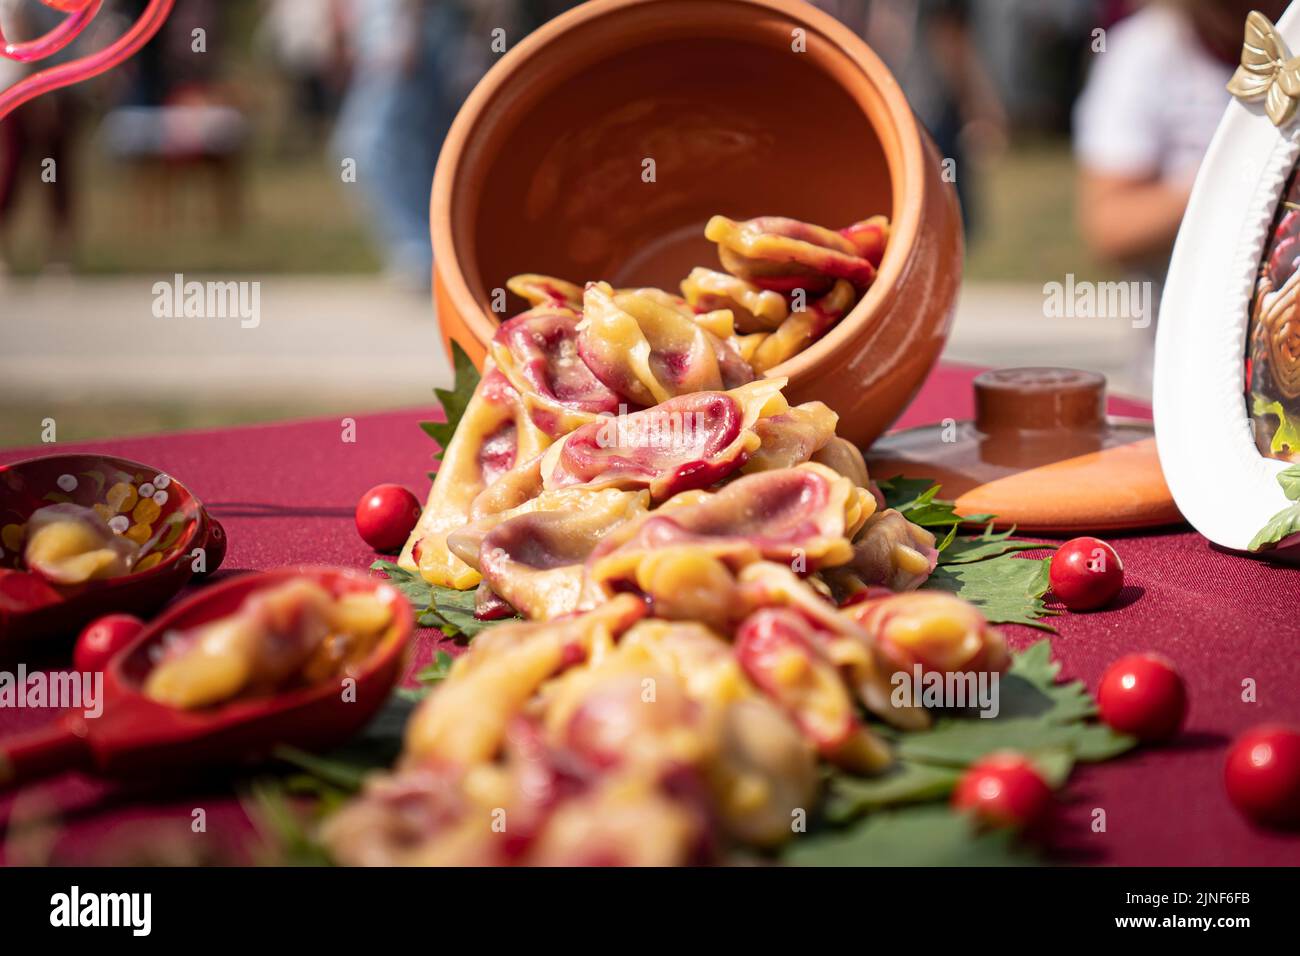 Dumplings, rellenos de cerezas, bayas. Pierogi, varenyky, vareniki pirohy - dumplings con relleno de plato popular Foto de stock